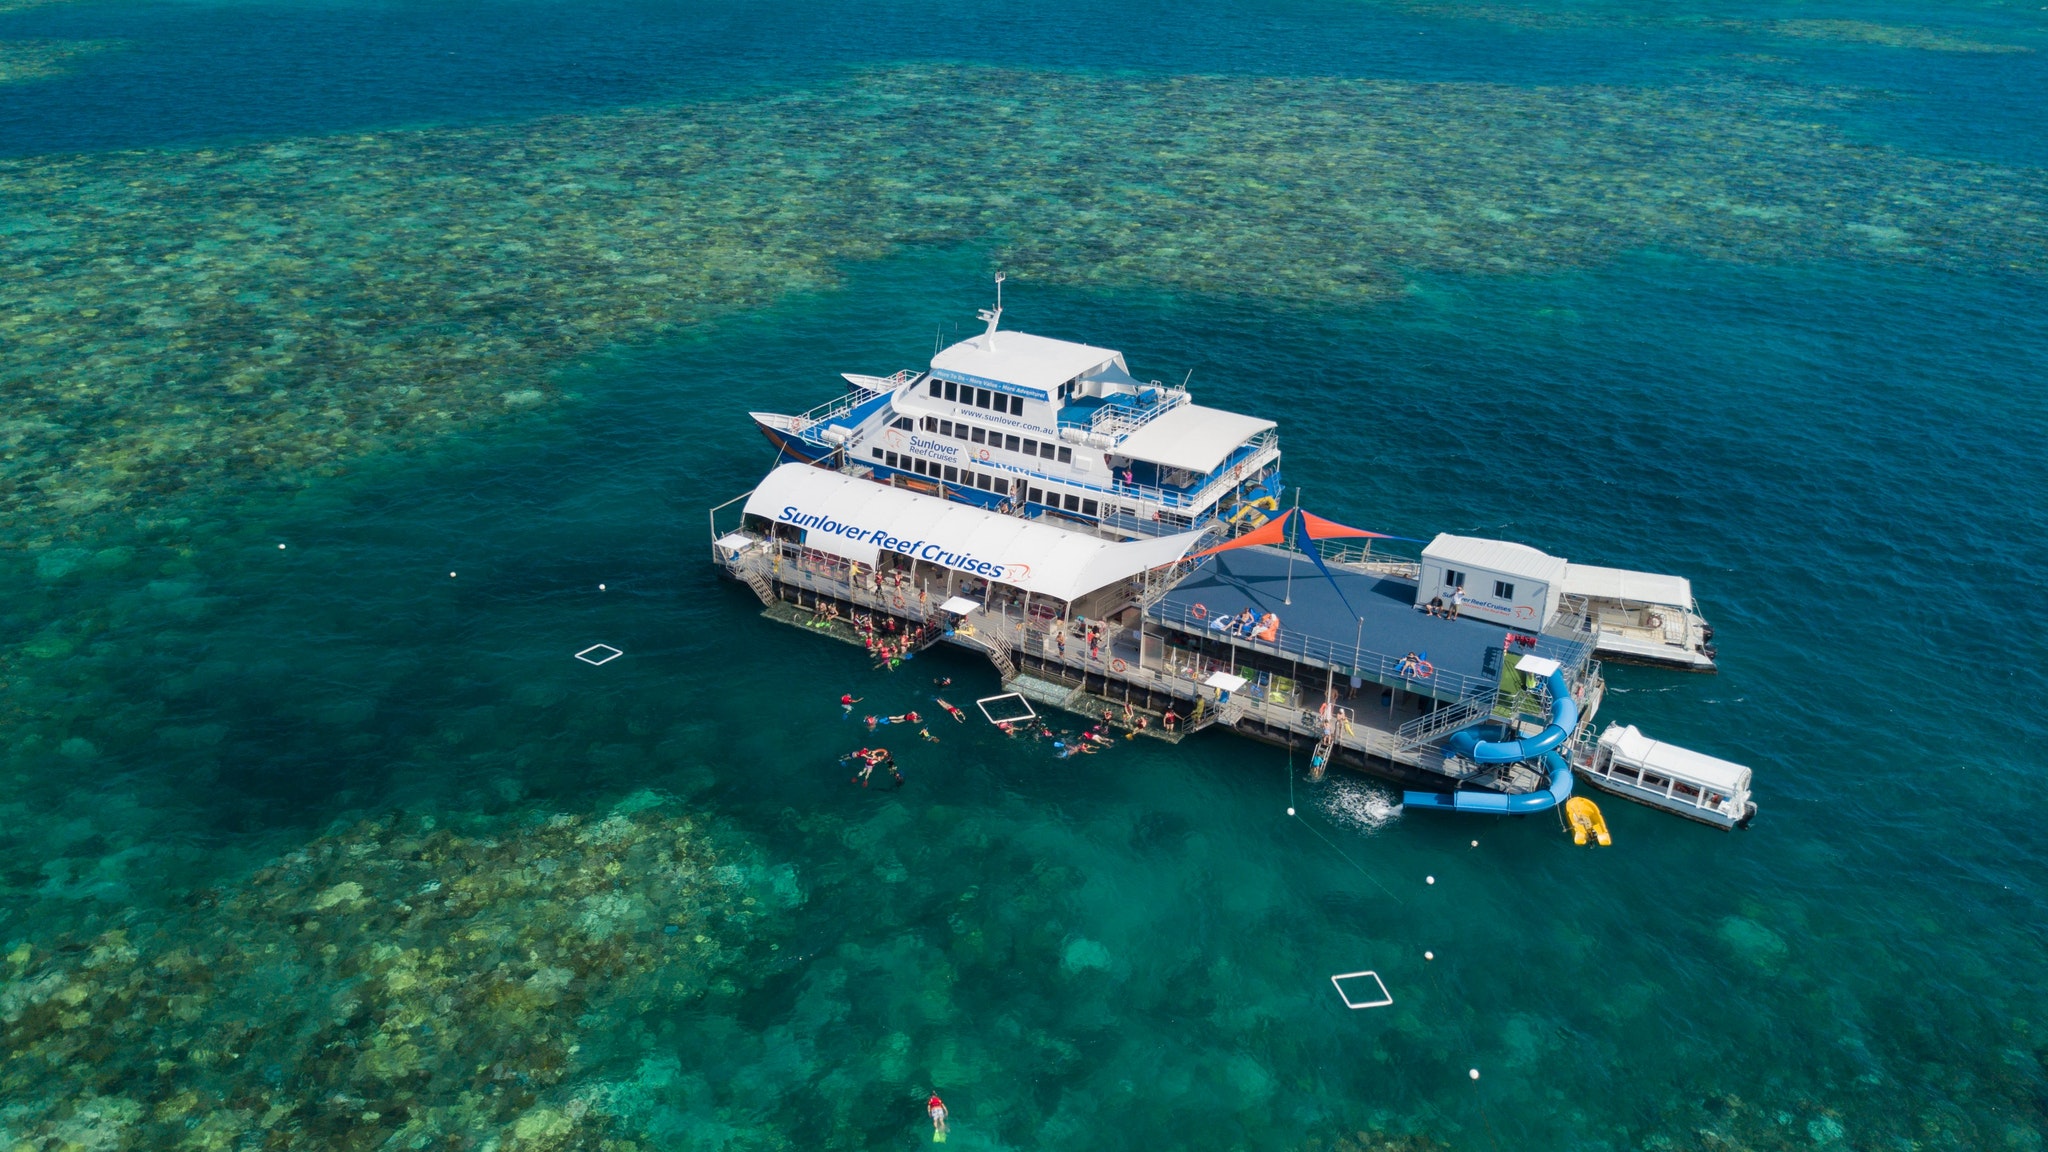 sunlover reef cruises overnight